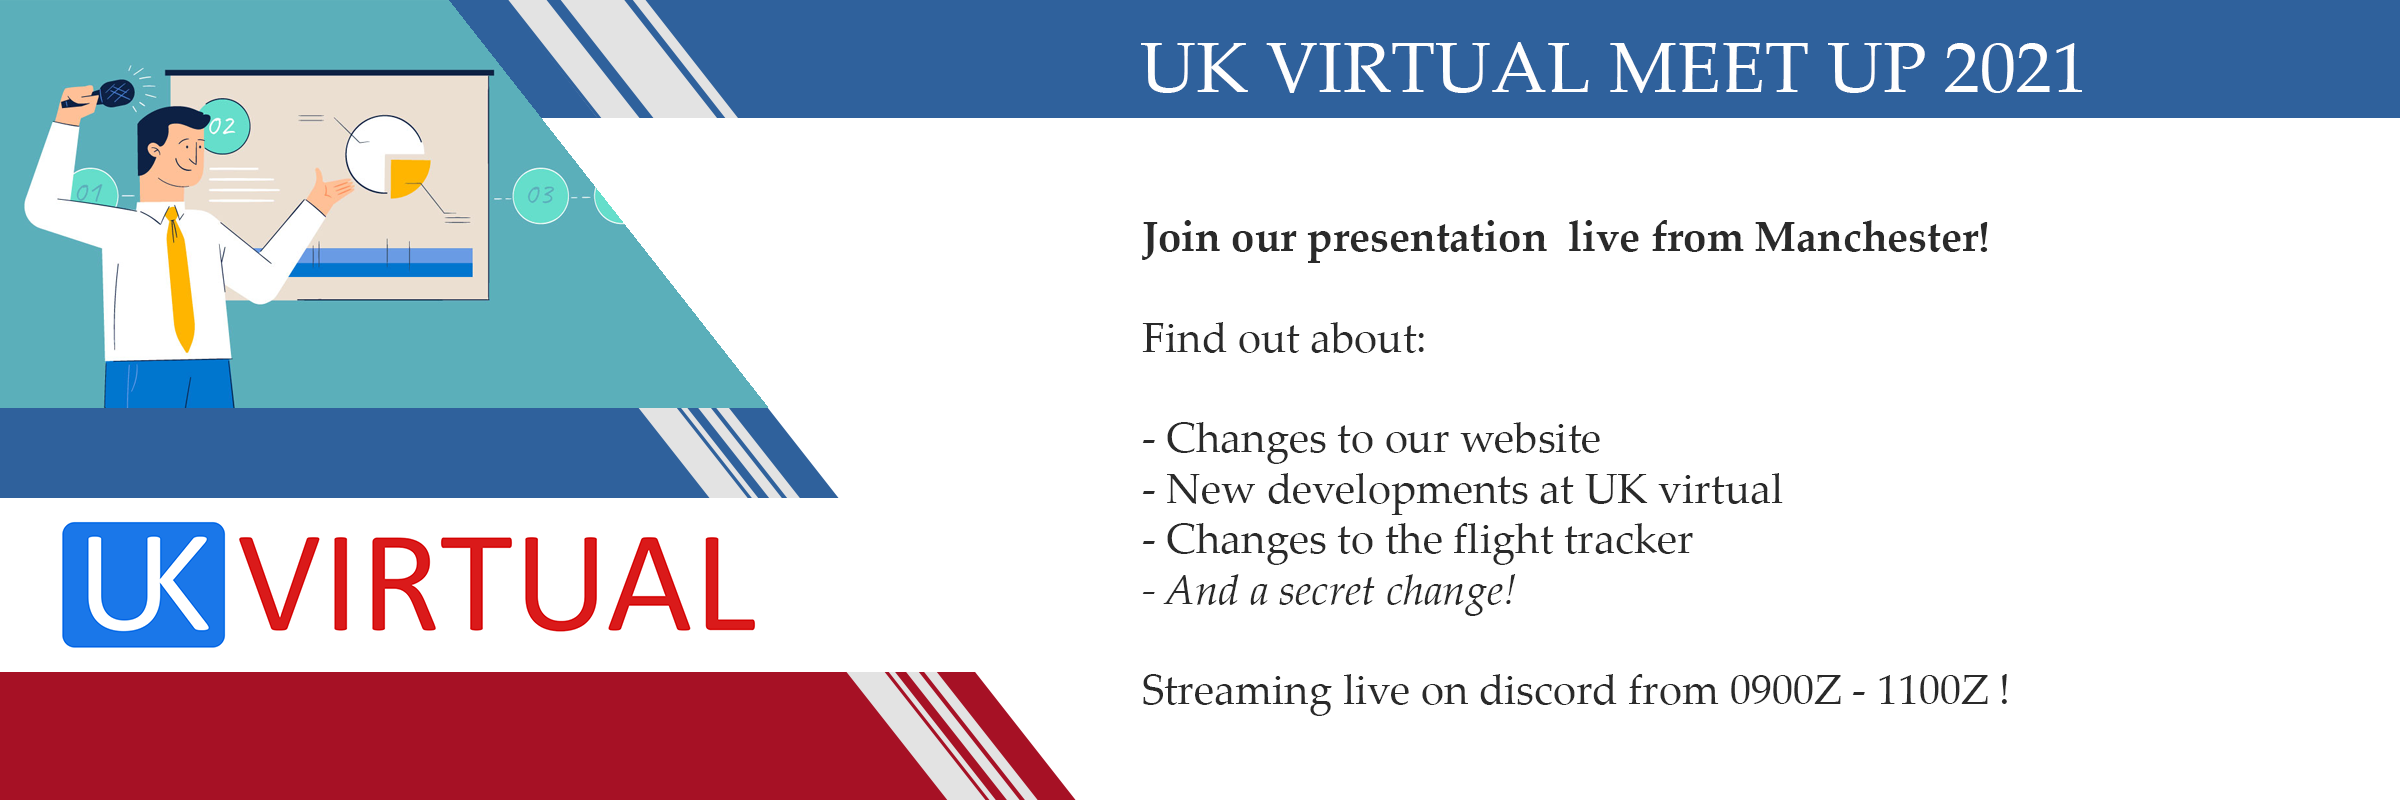 UK virtual Meet Up 2021 – Presentation